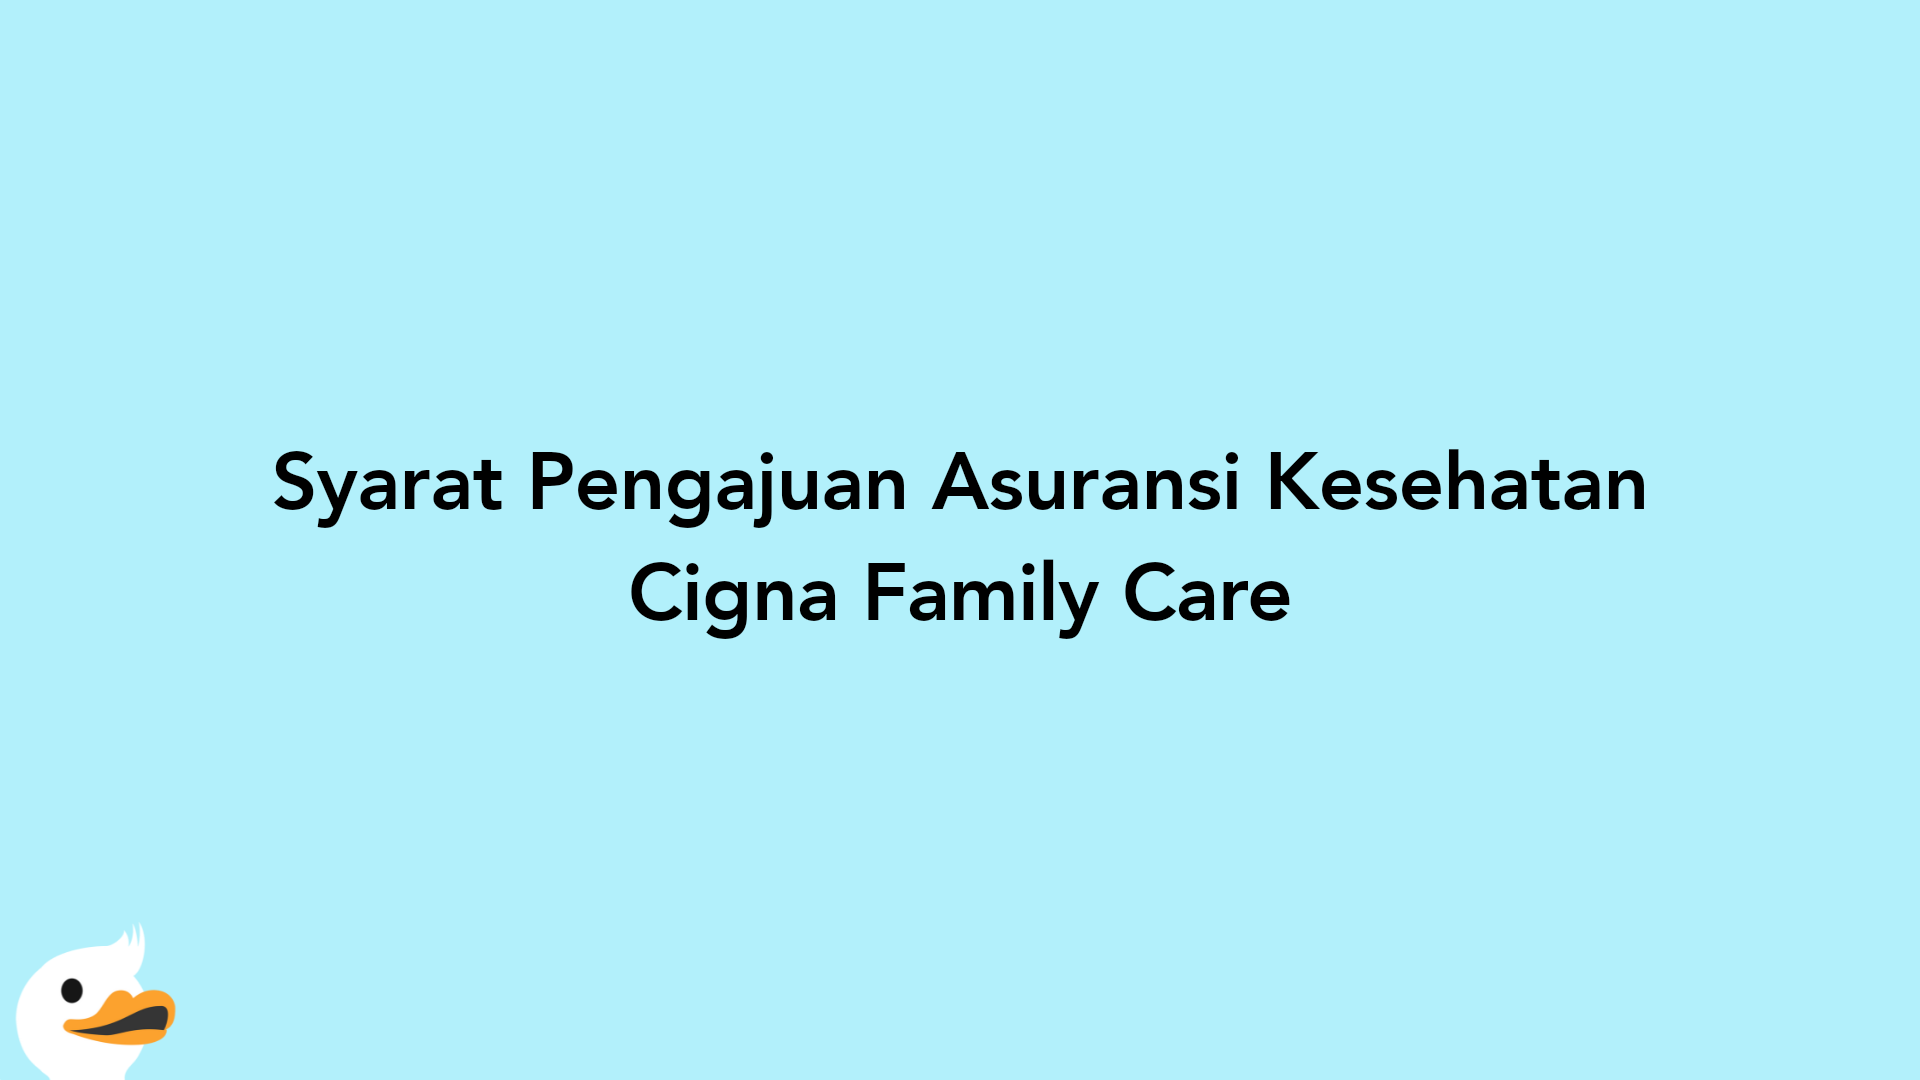 Syarat Pengajuan Asuransi Kesehatan Cigna Family Care